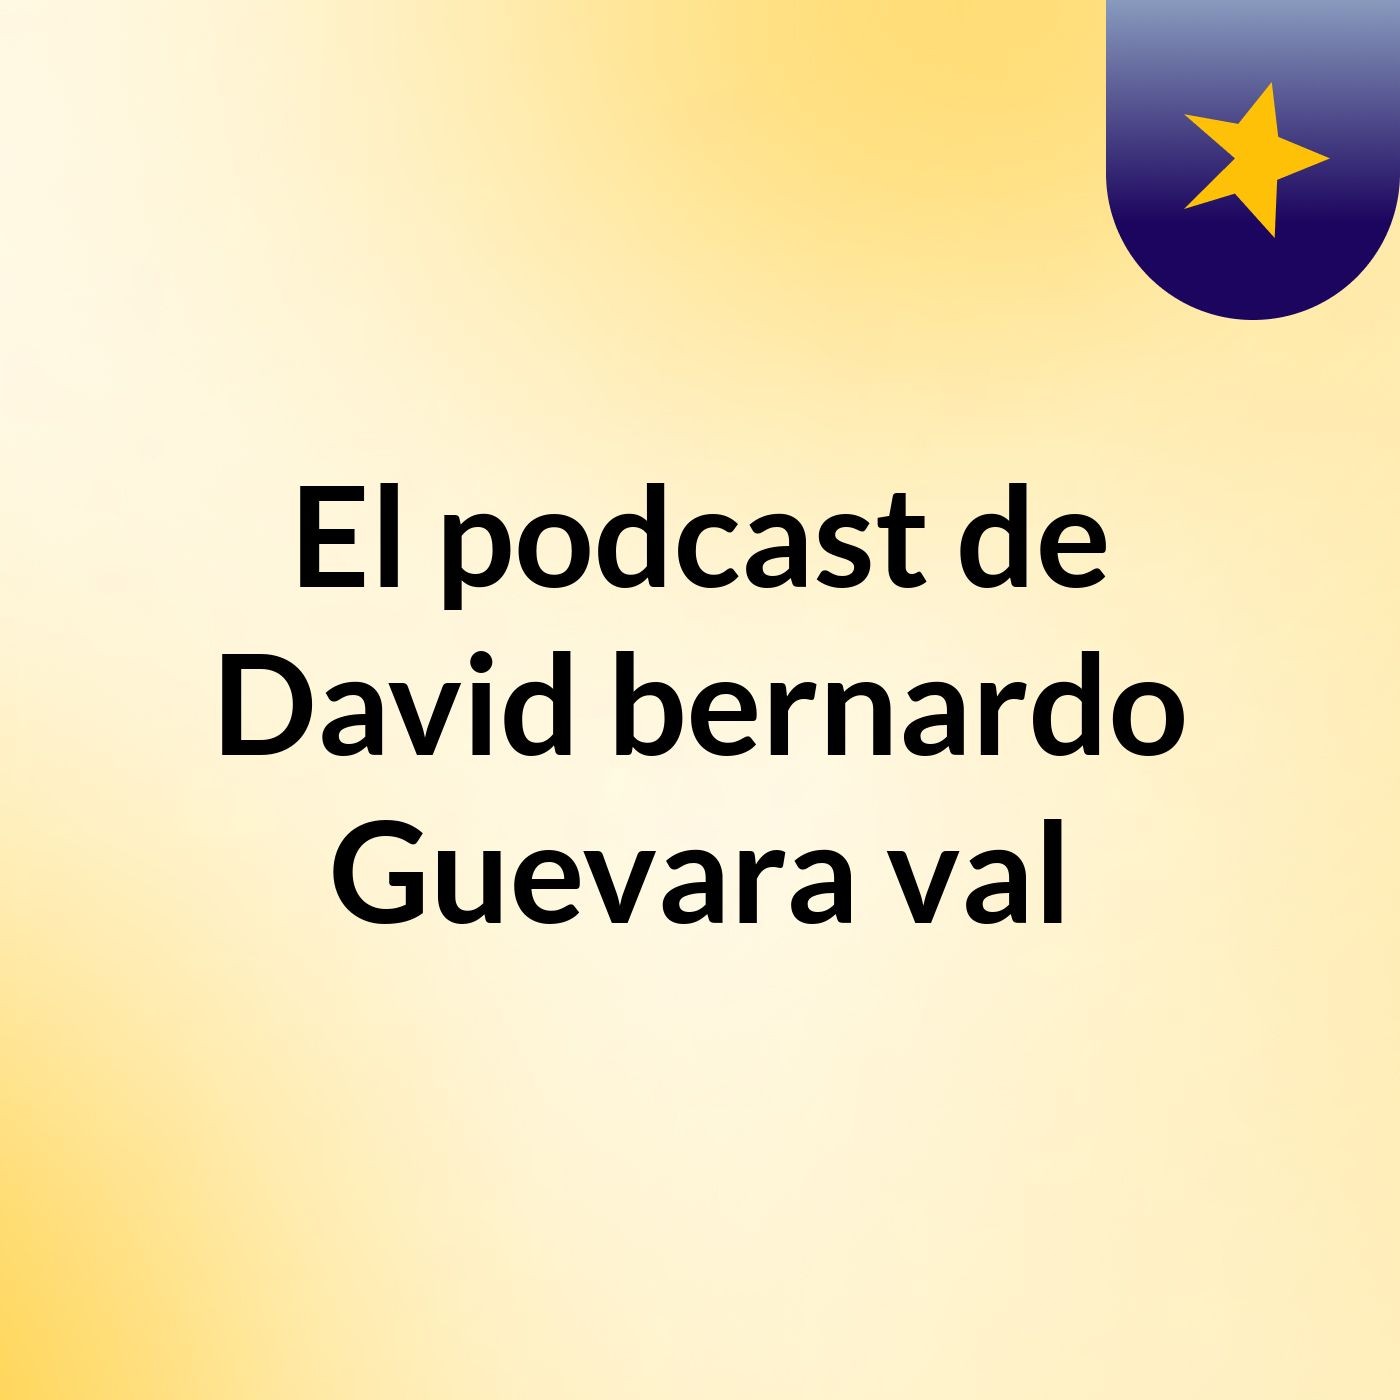 El podcast de David bernardo Guevara val